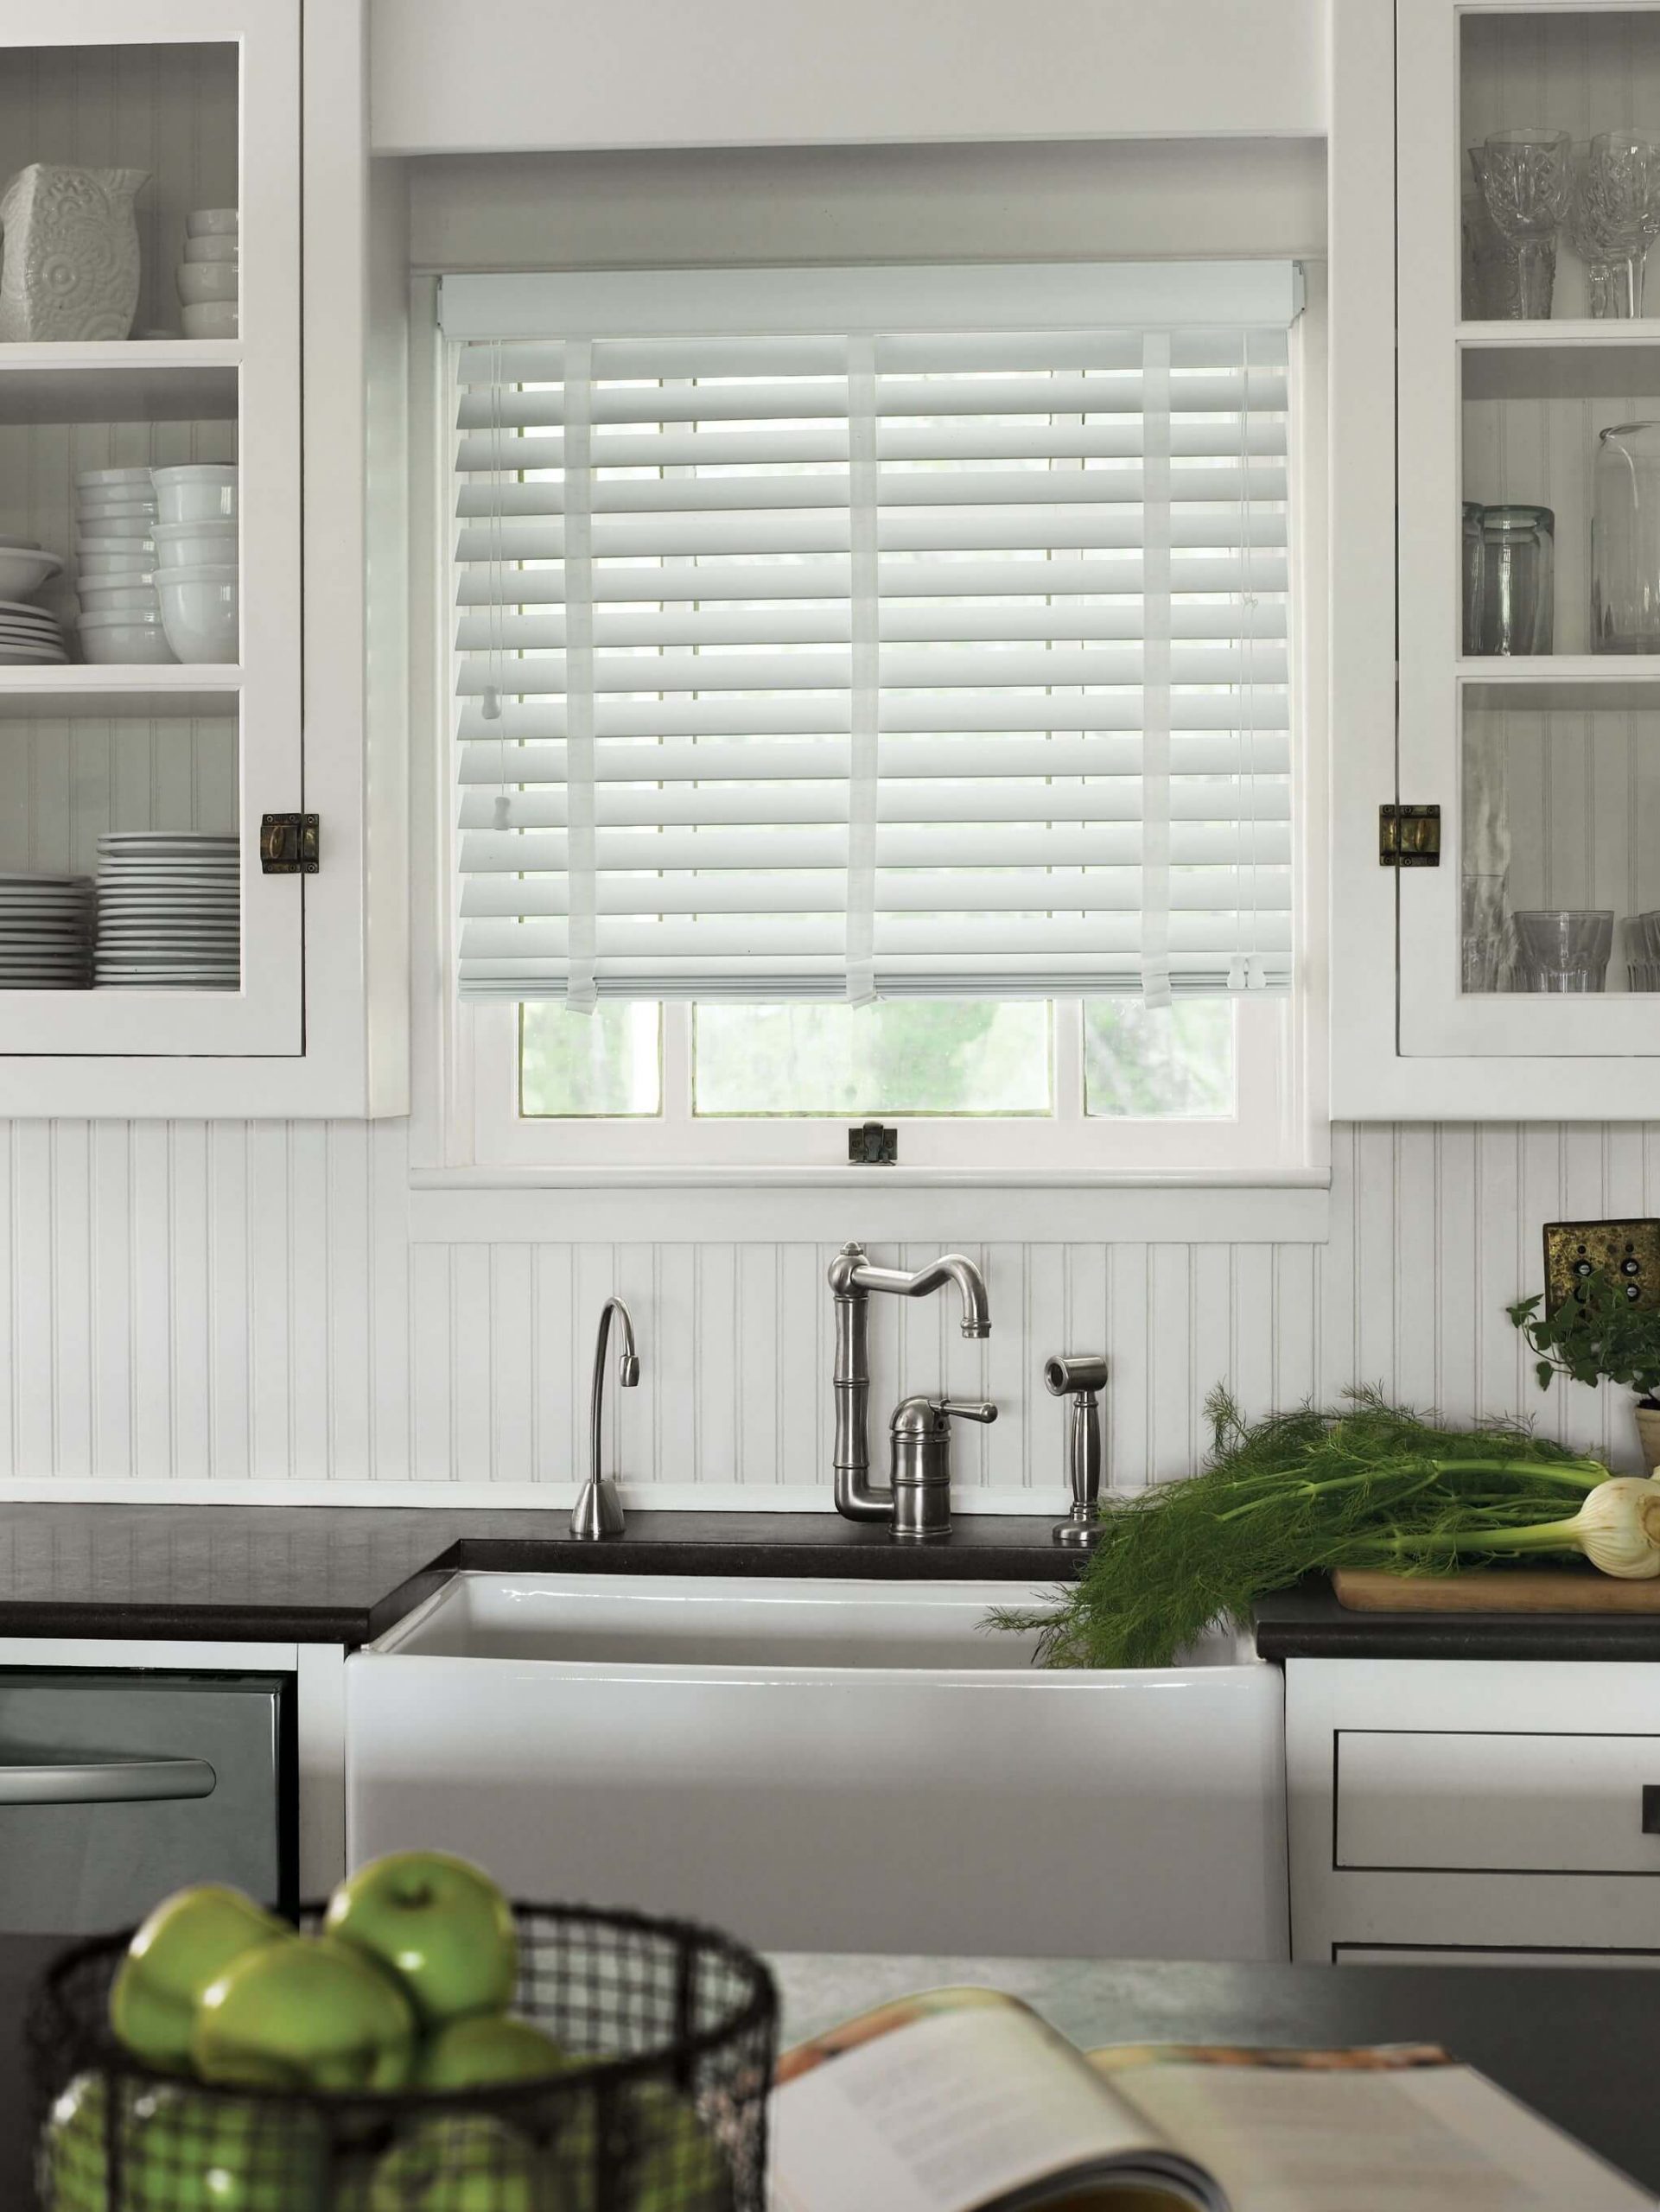 Kitchen Window Blinds Ideas Uk